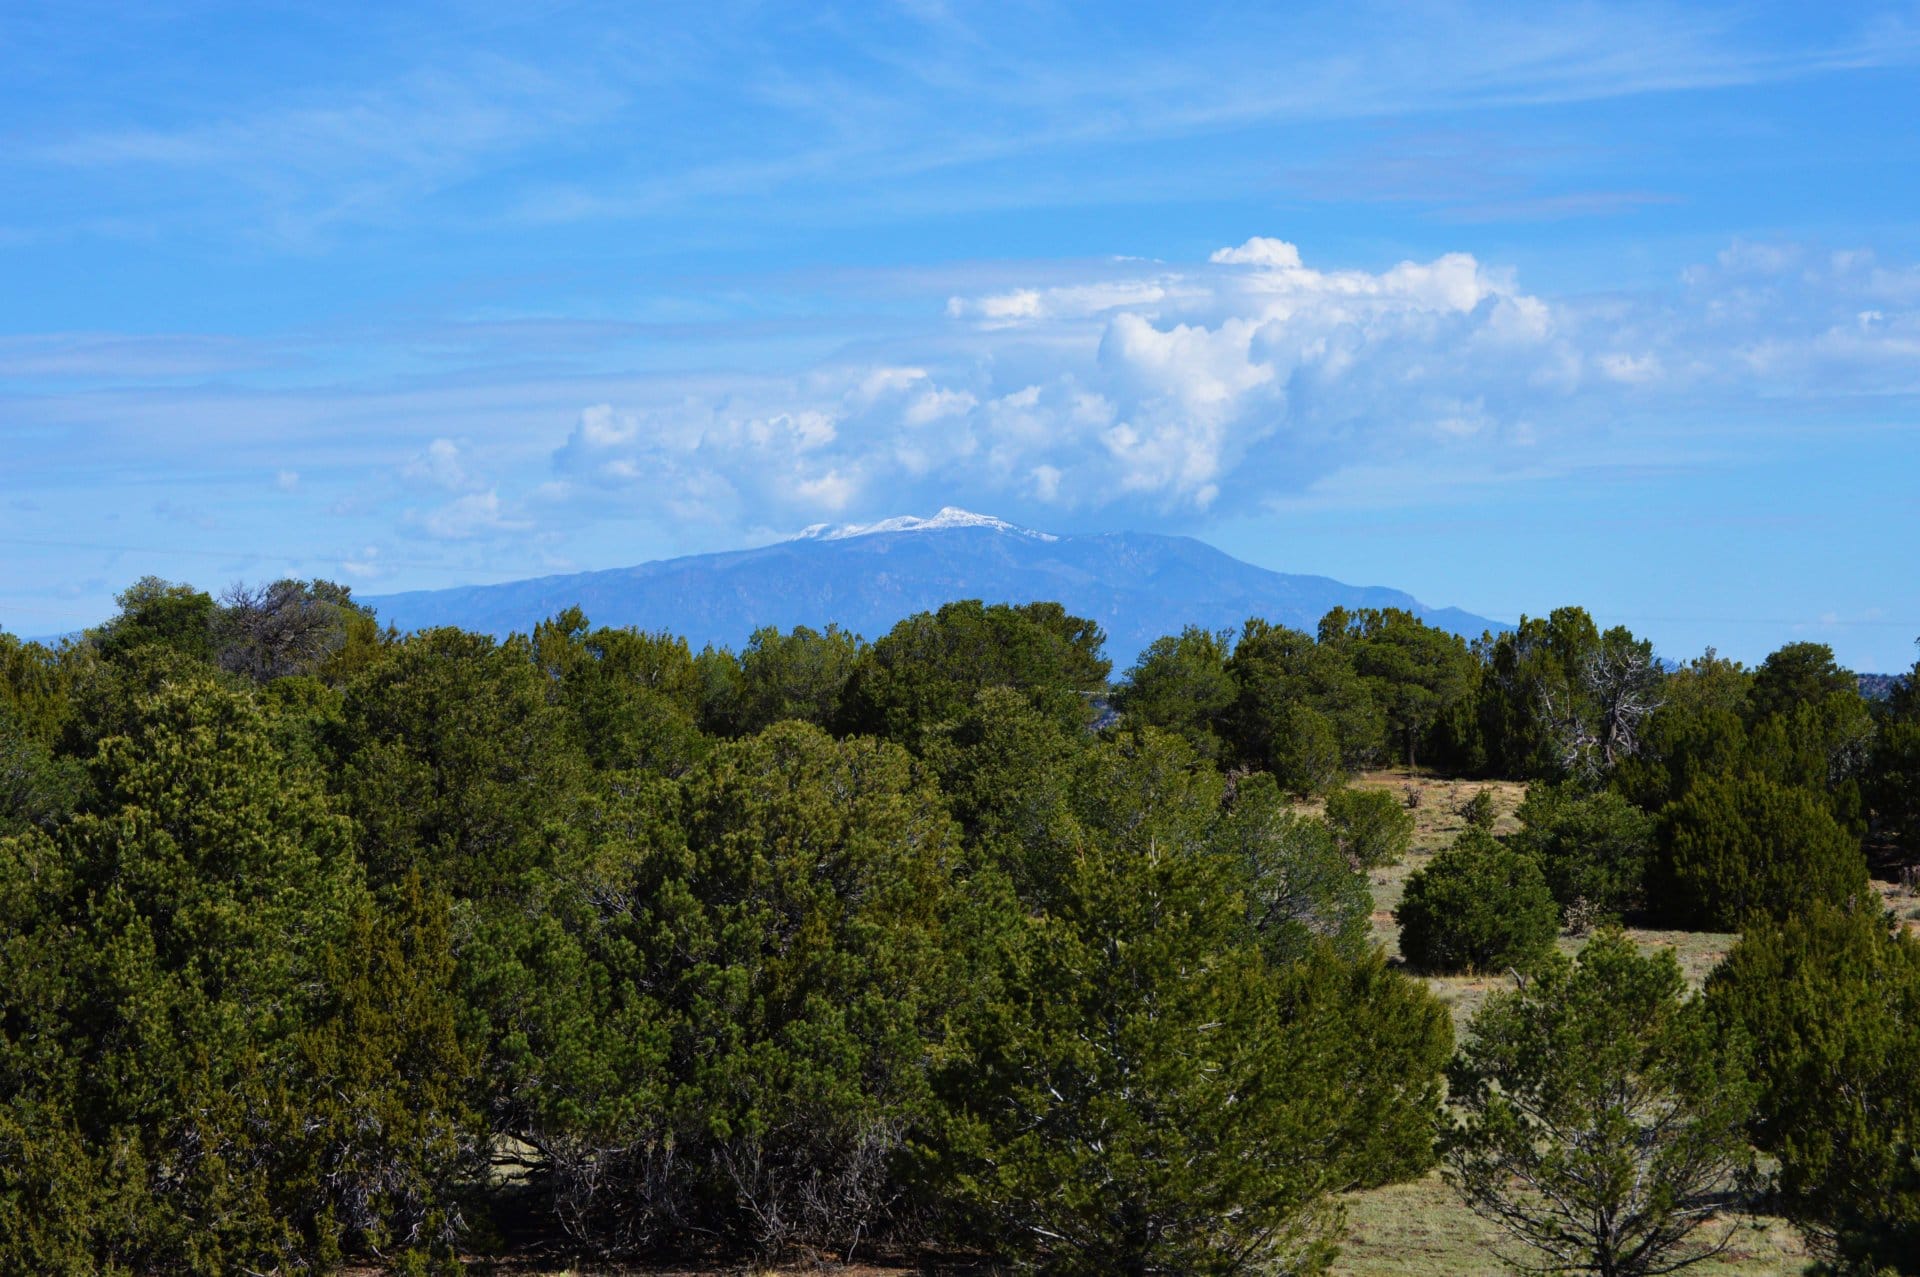 greenhorn mountain view colorado wild mustang ranch